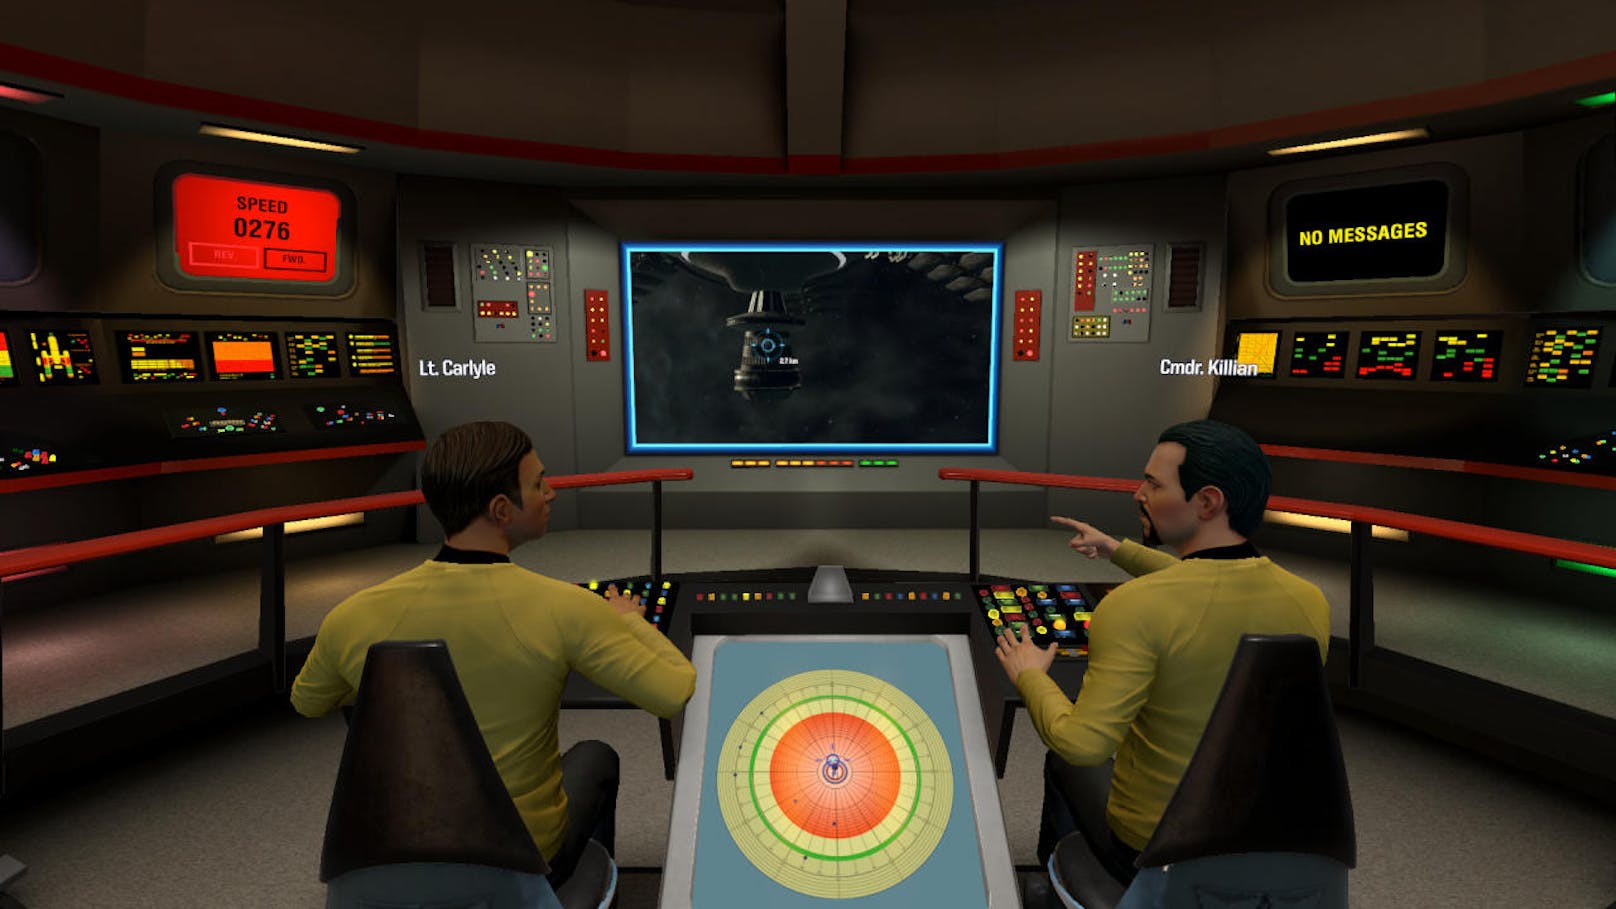  <a href="https://www.heute.at/digital/games/story/Star-Trek--Bridge-Crew-im-Test---einmal-Captain-sein-54260215" target="_blank">Star Trek: Bridge Crew (VR)</a>